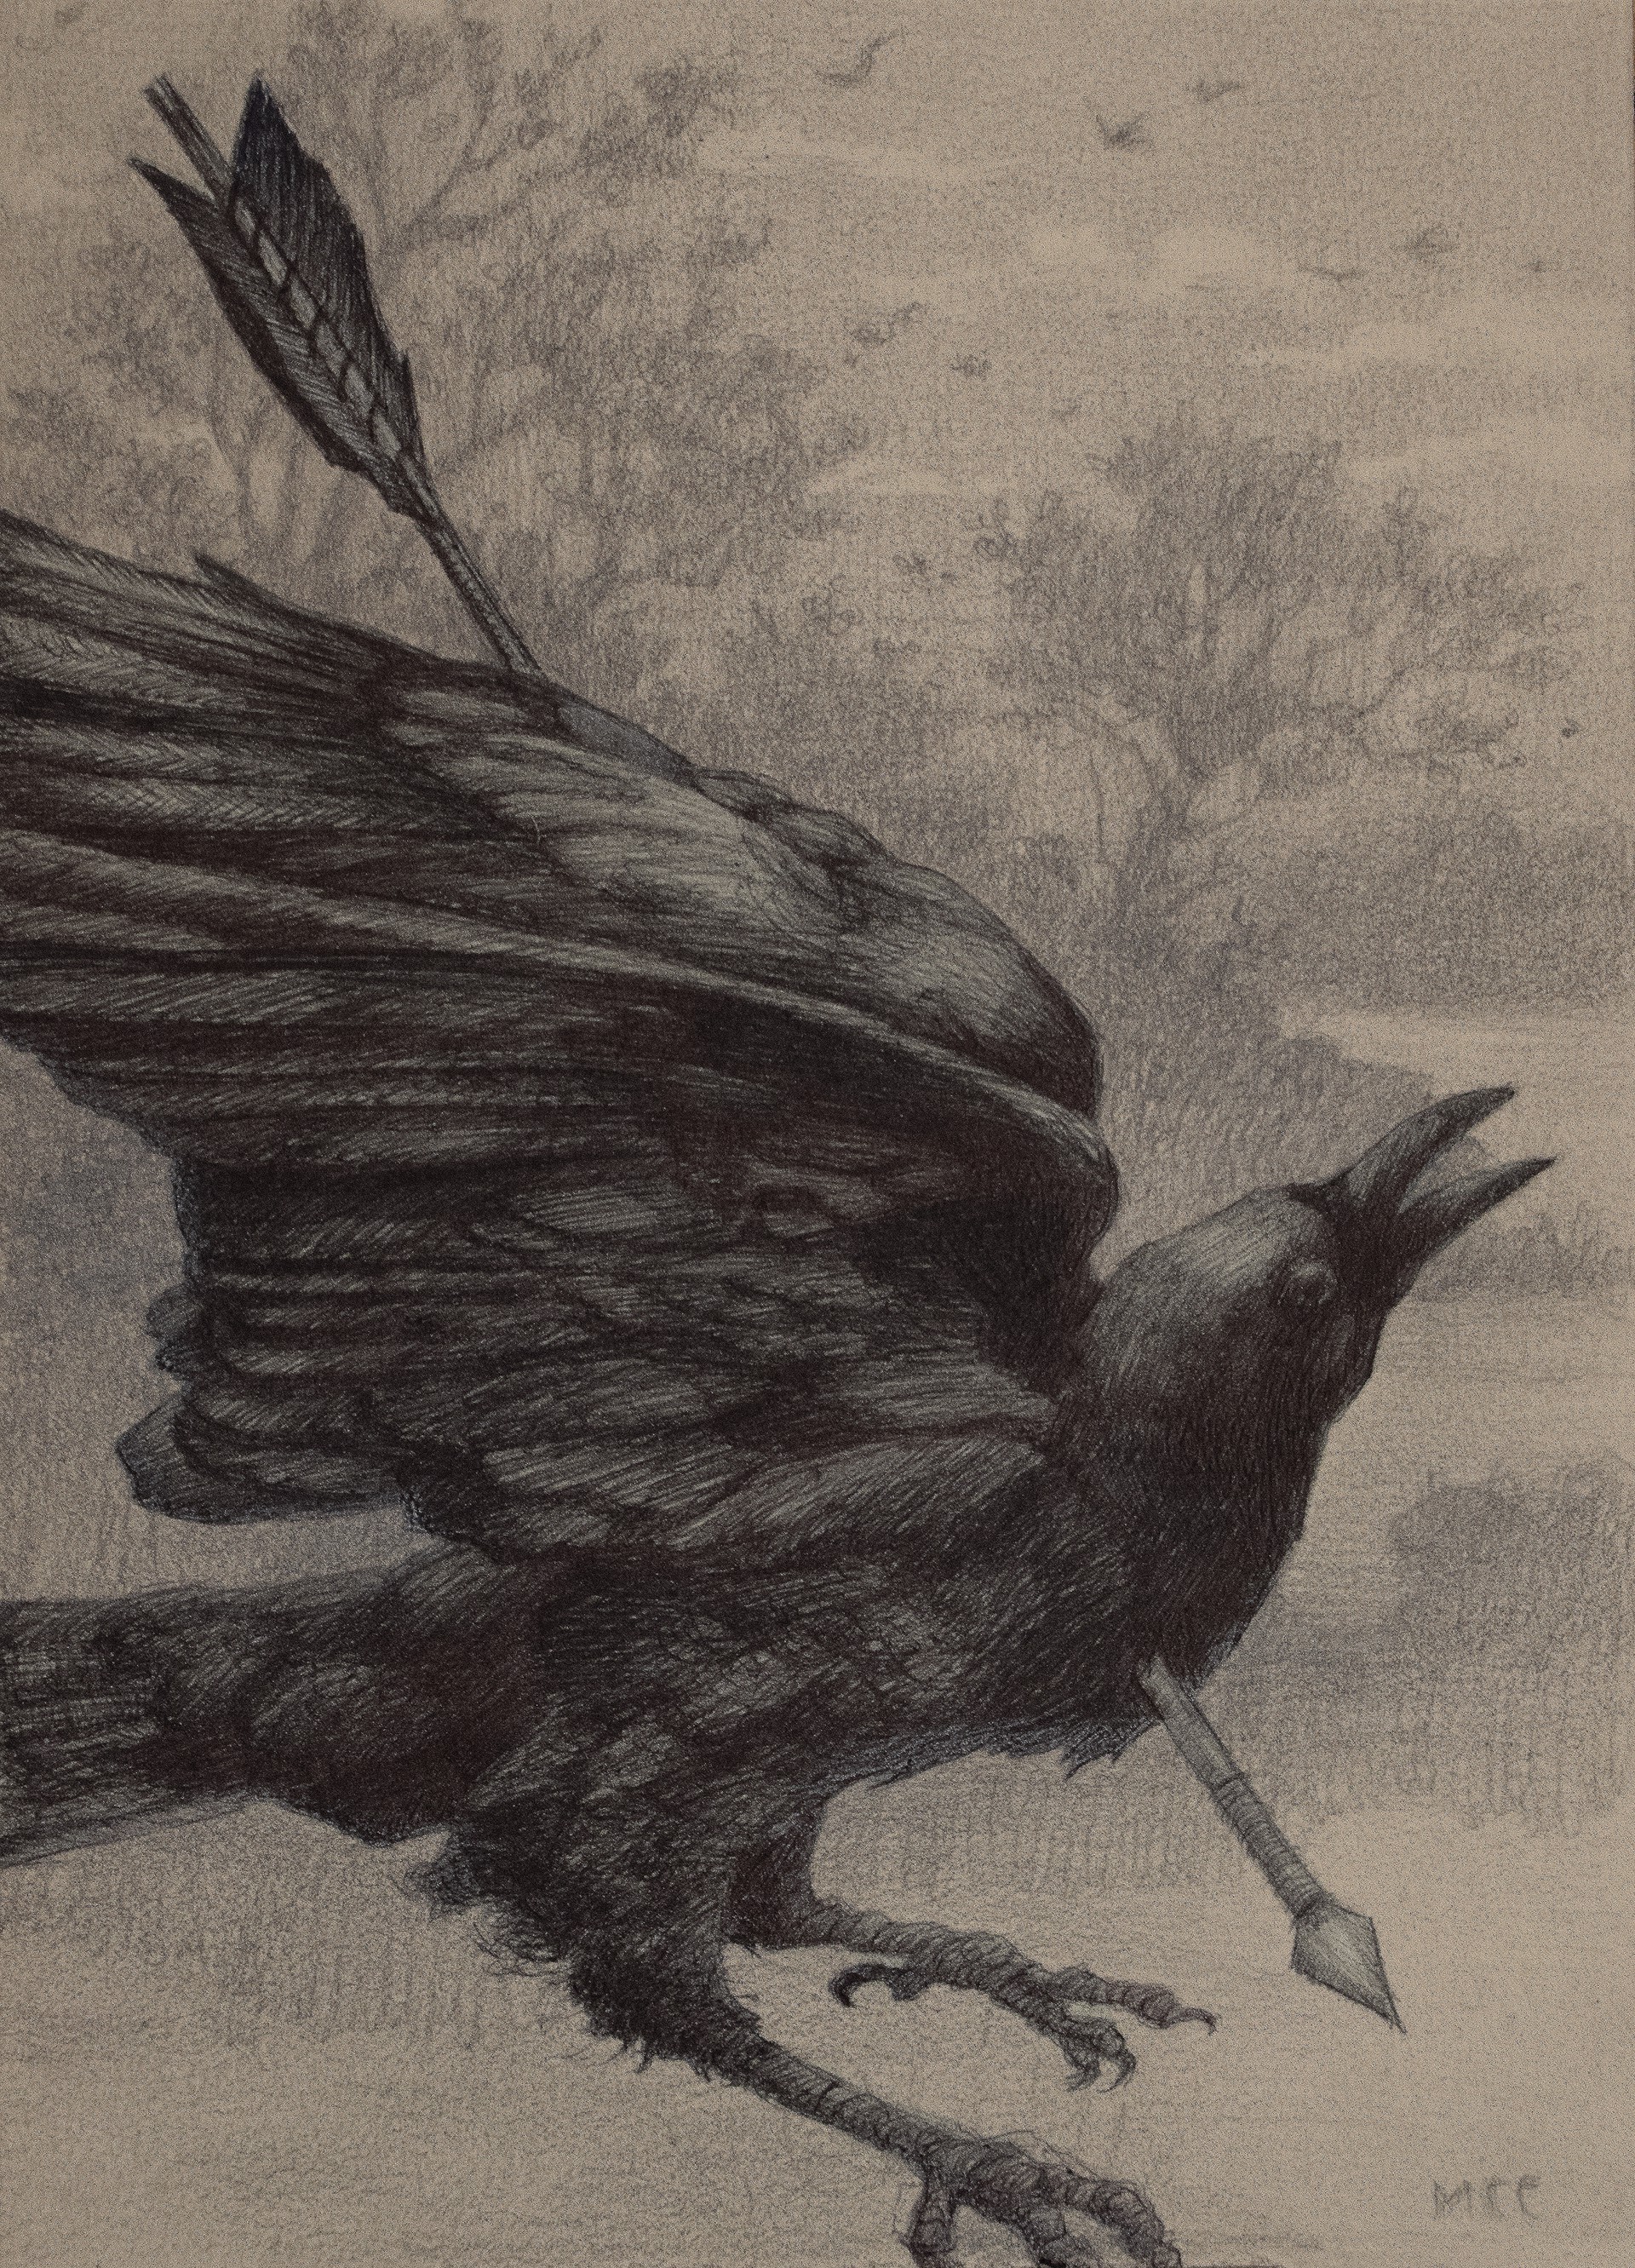 Black Bird Flying by Mary Carroll